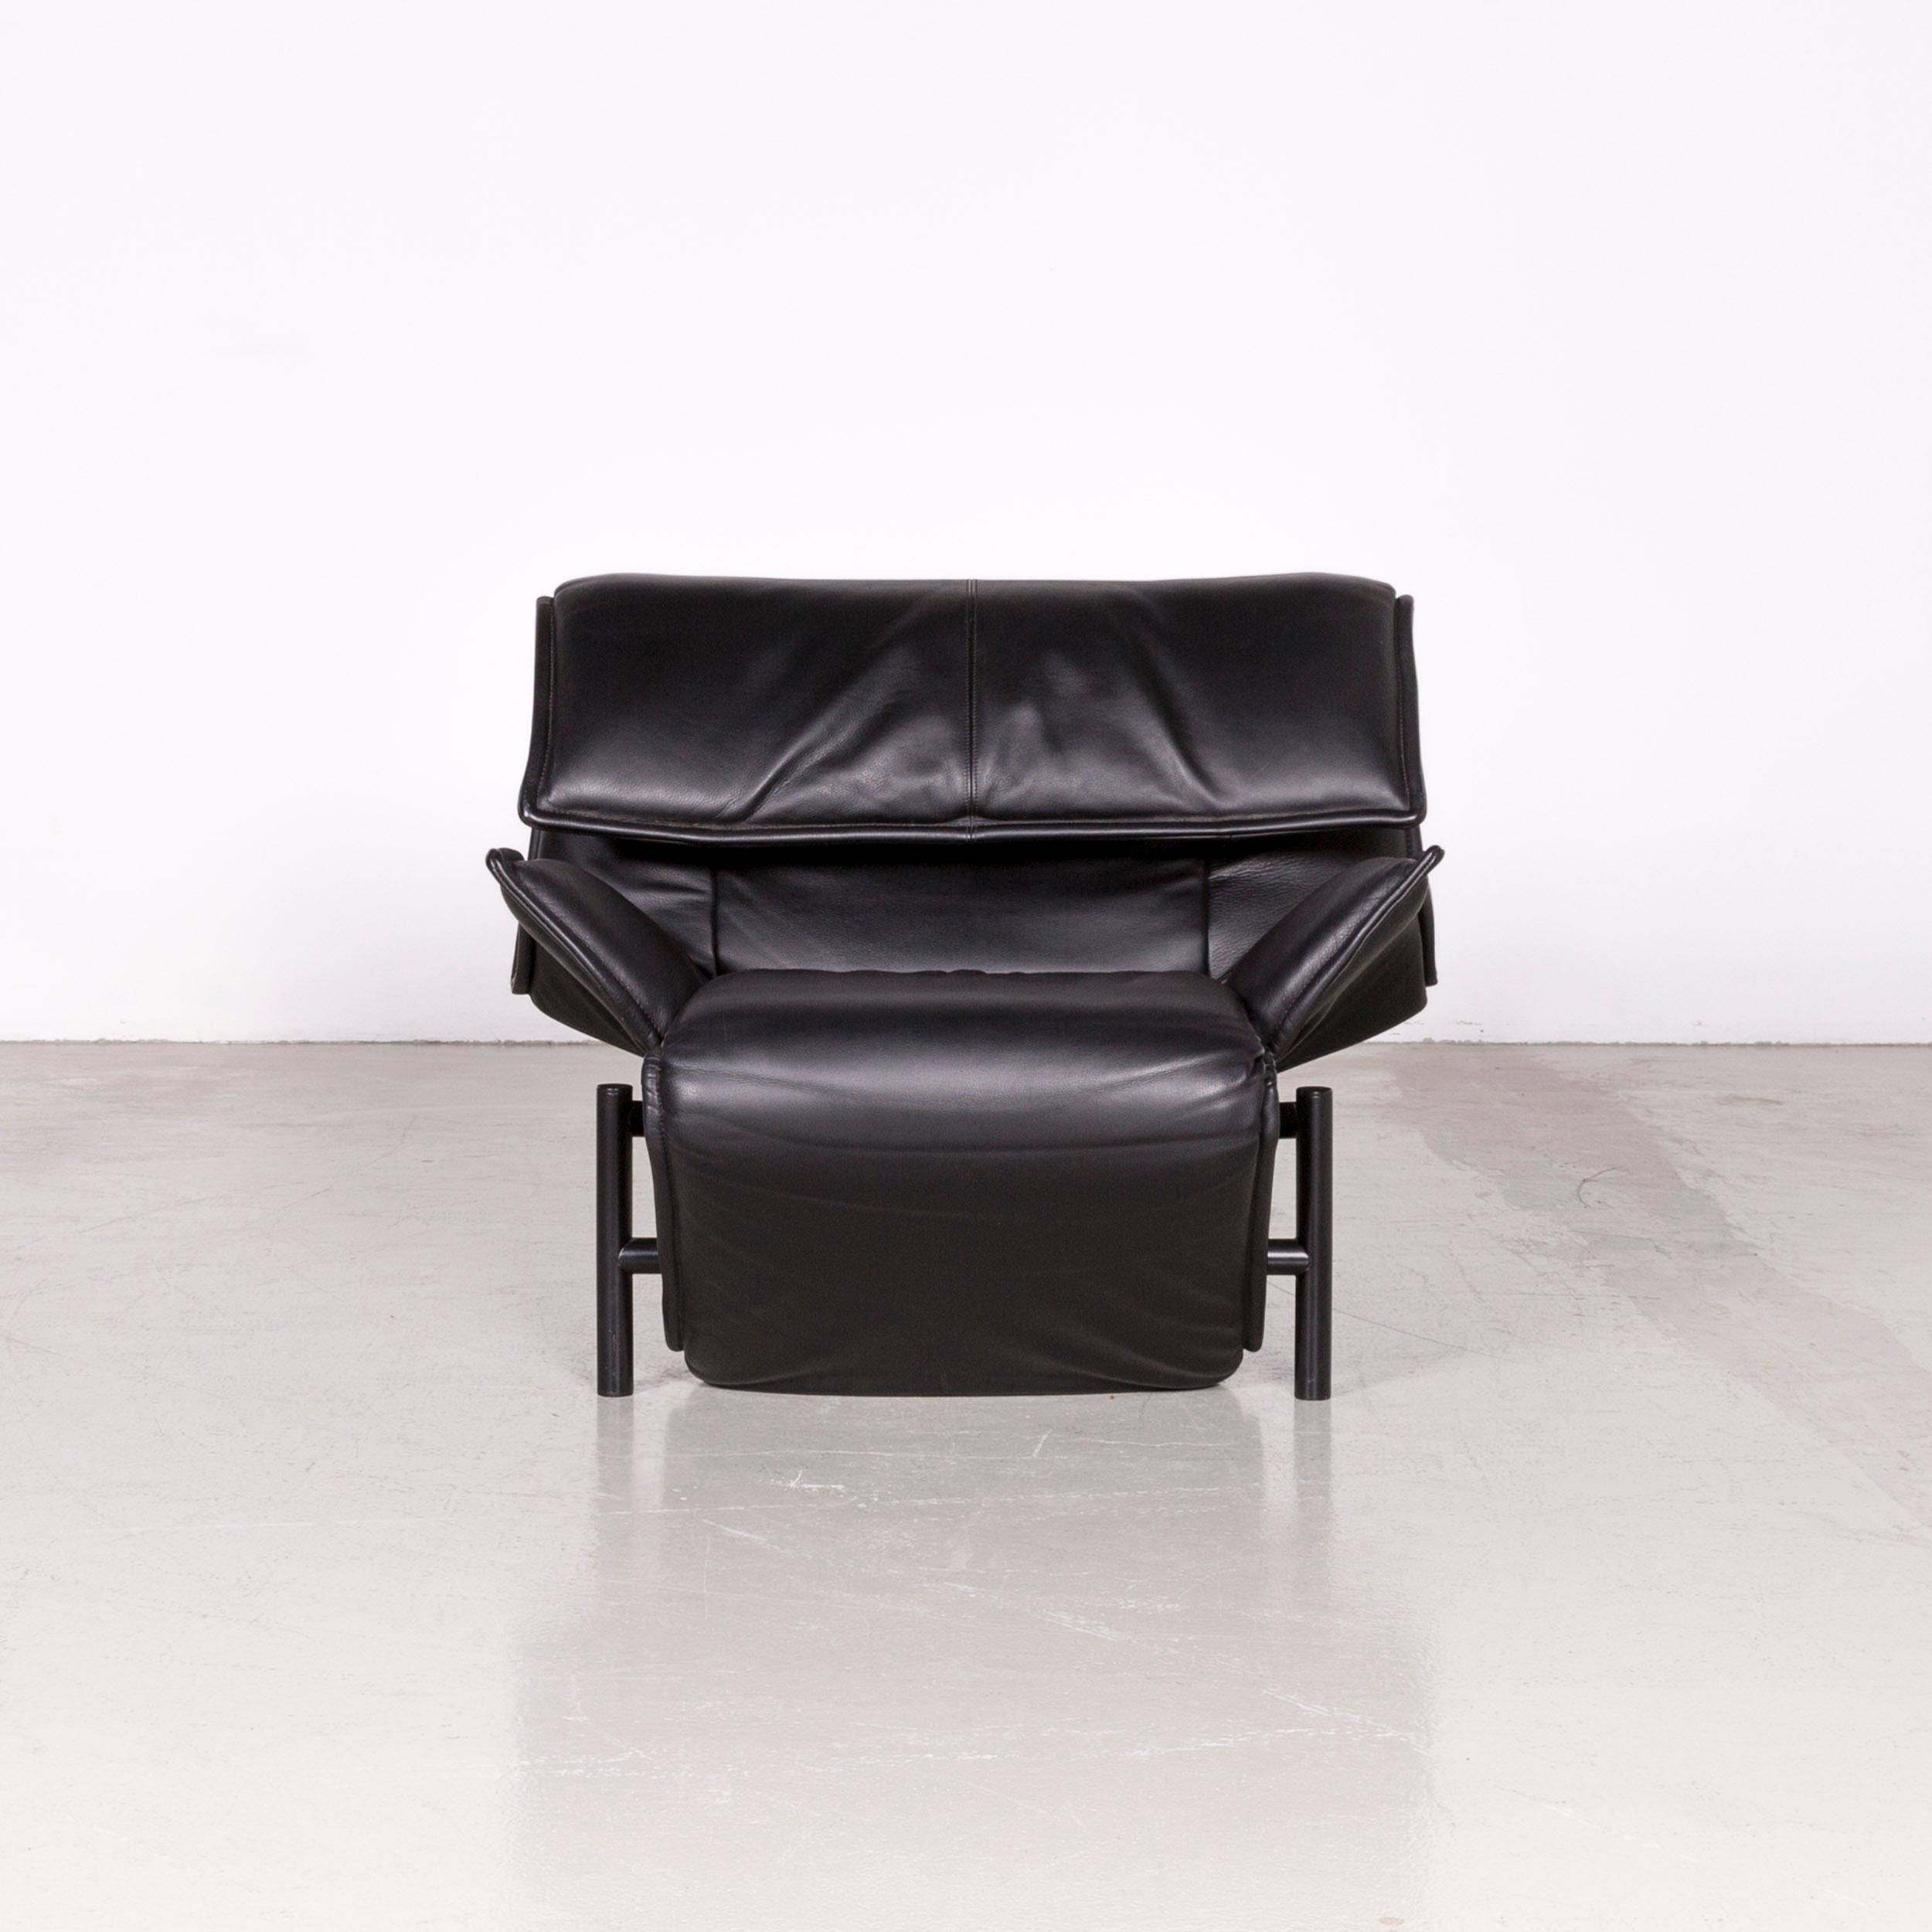 Dutch Cassina Veranda Designer Leather Armchair in Black Recliner Function For Sale